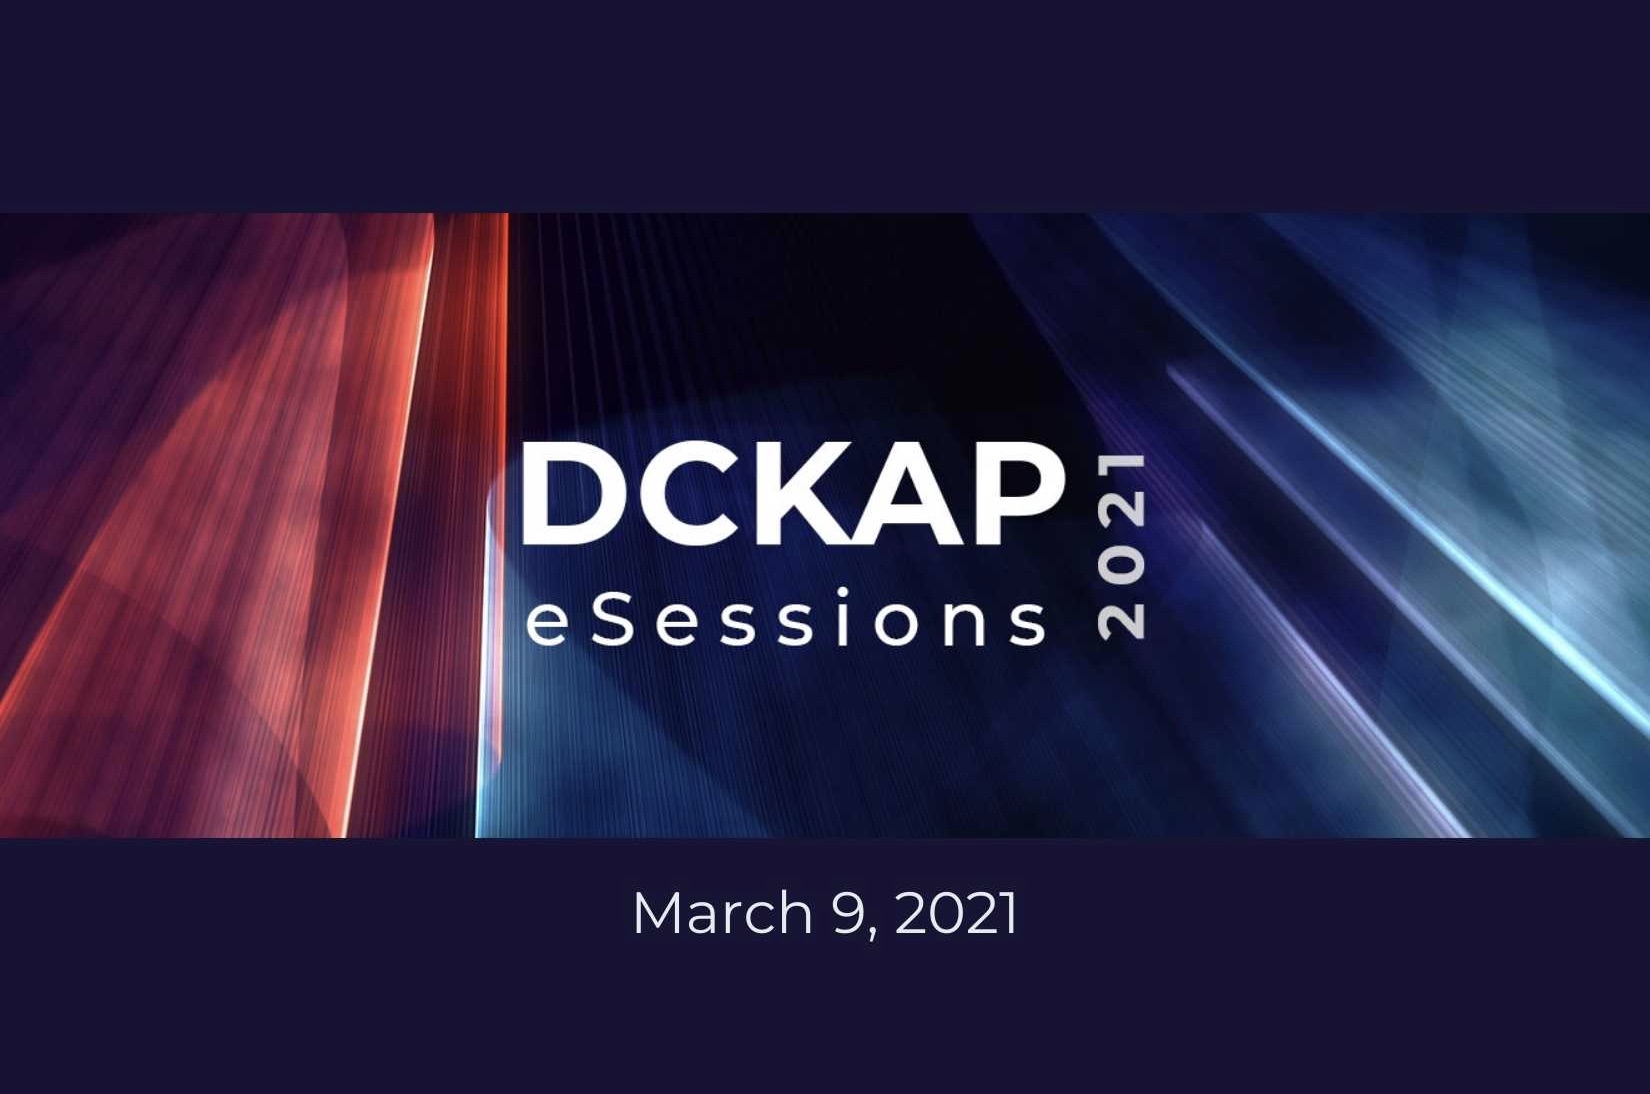 DCKAP eSession 2021 - B2B eCommerce